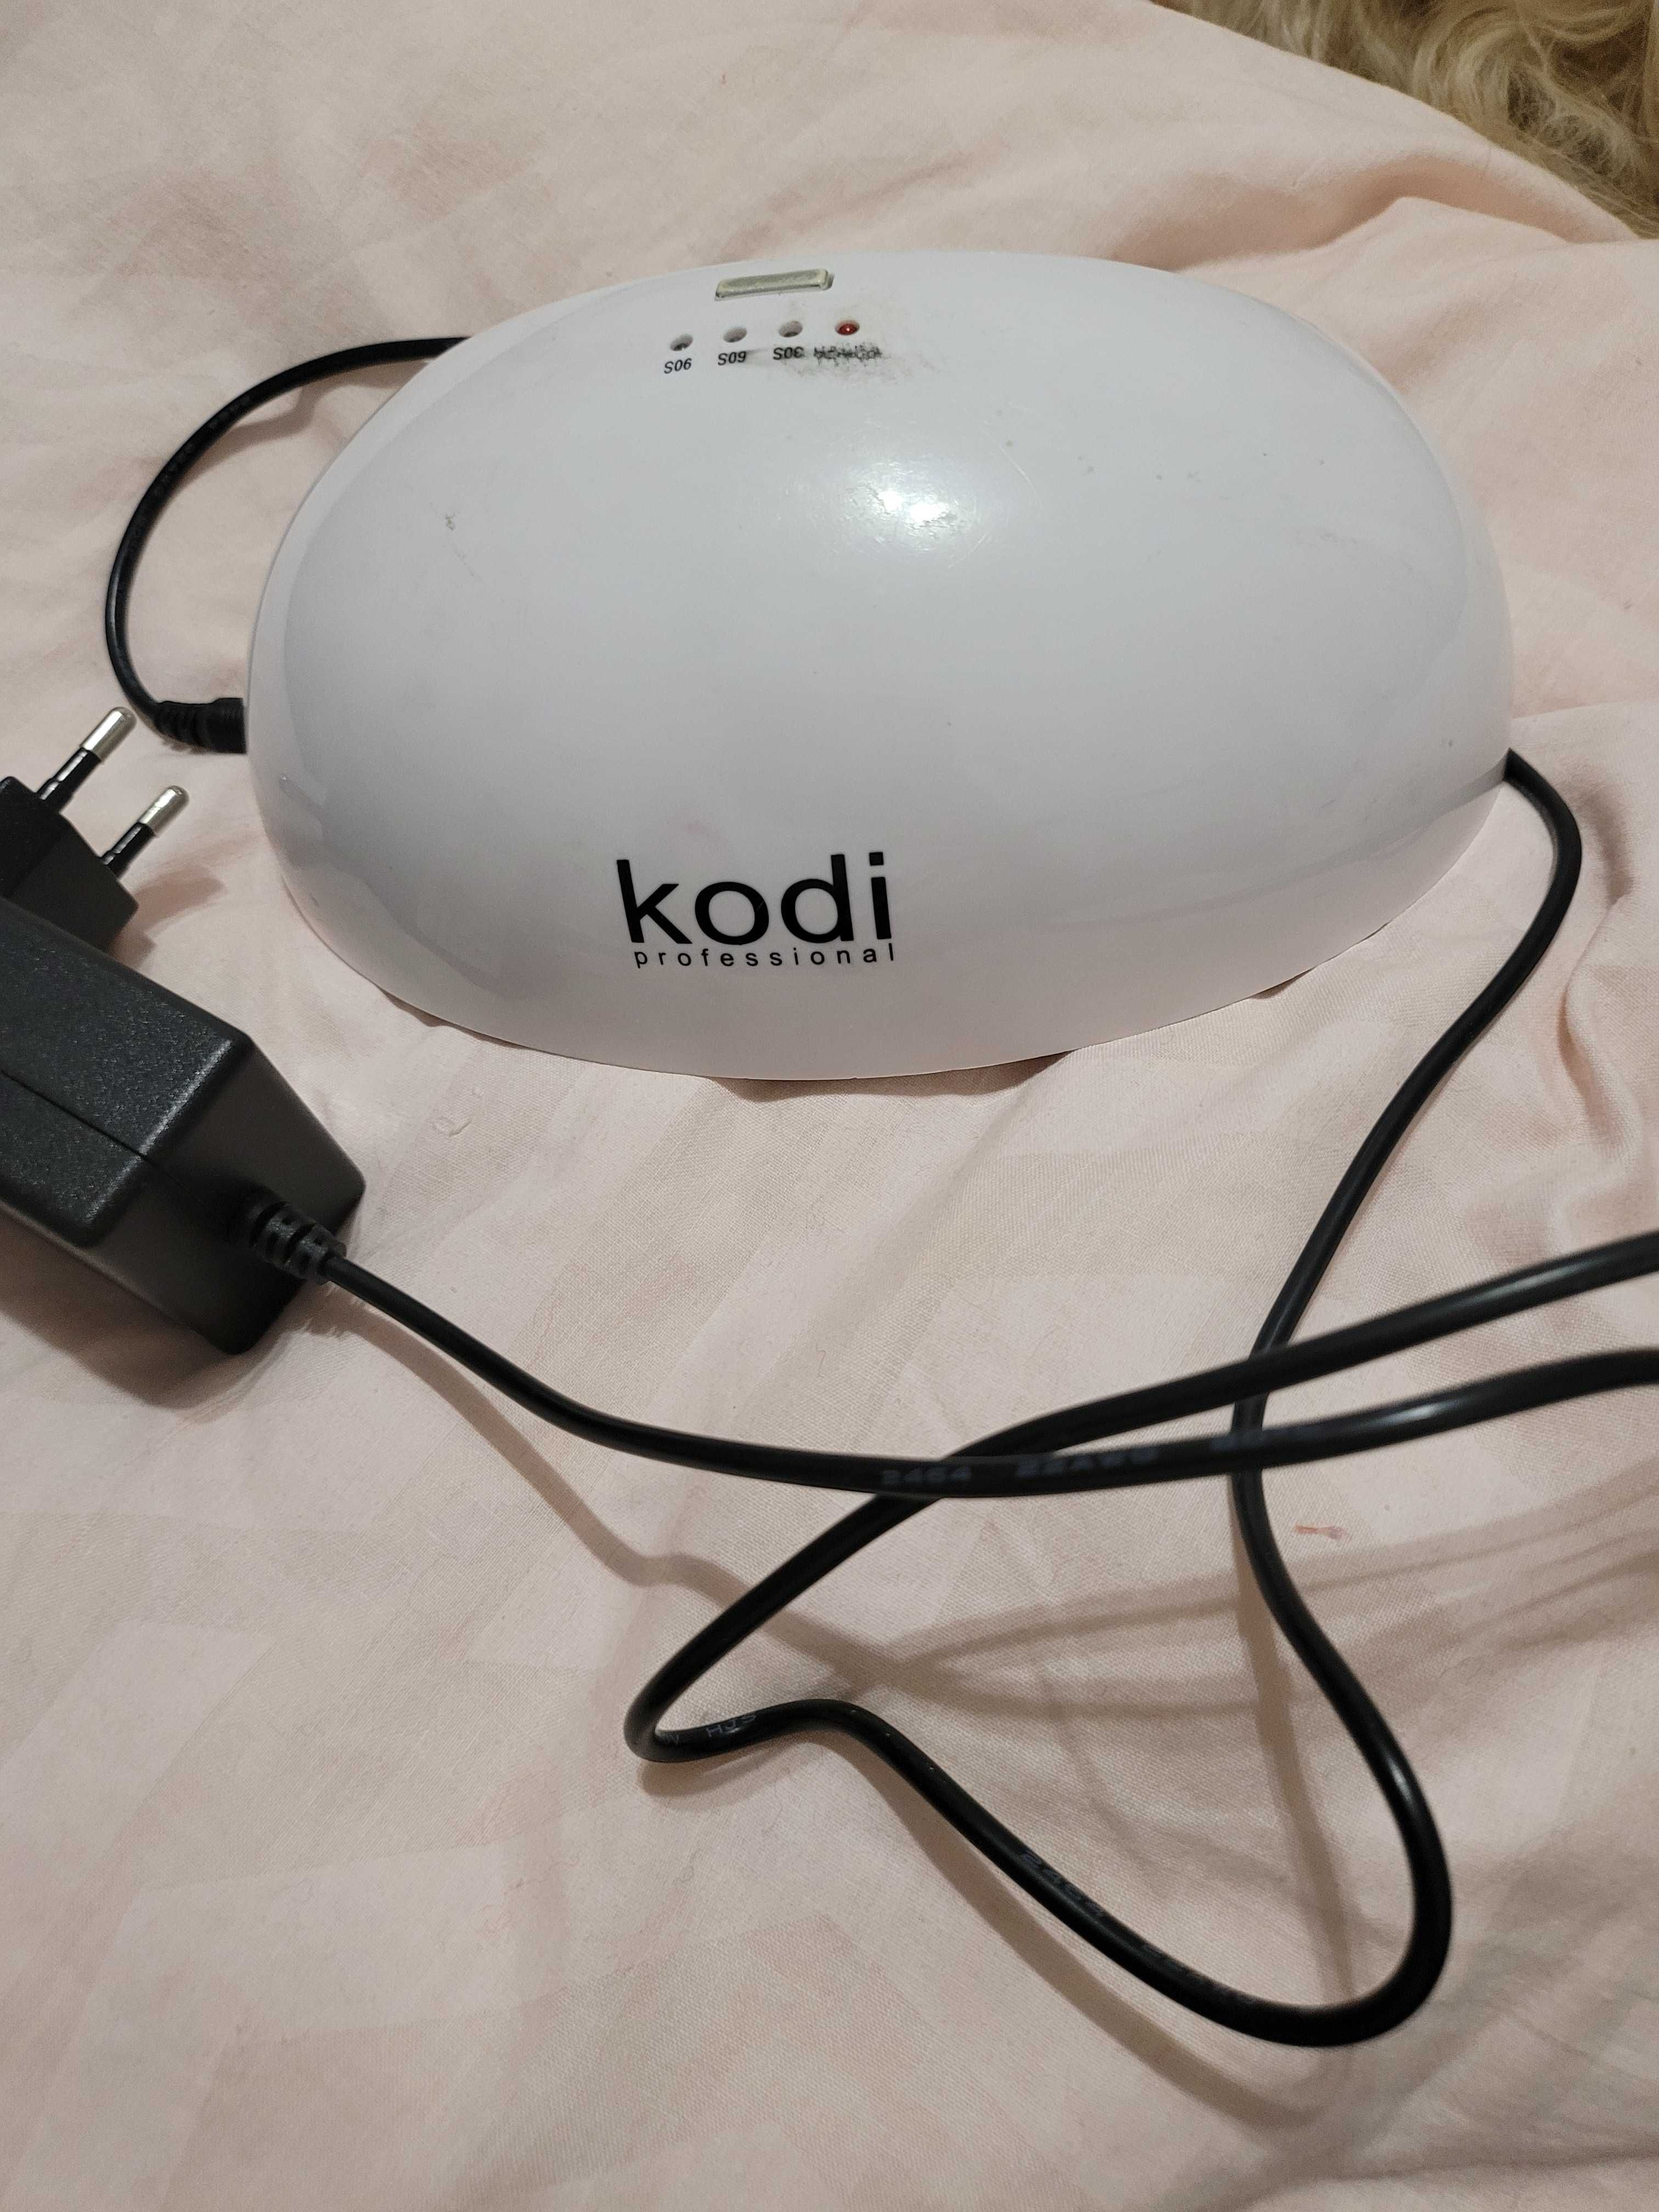 UV LED лампа Kodi professional для полимеризации гель-лака 9 Вт